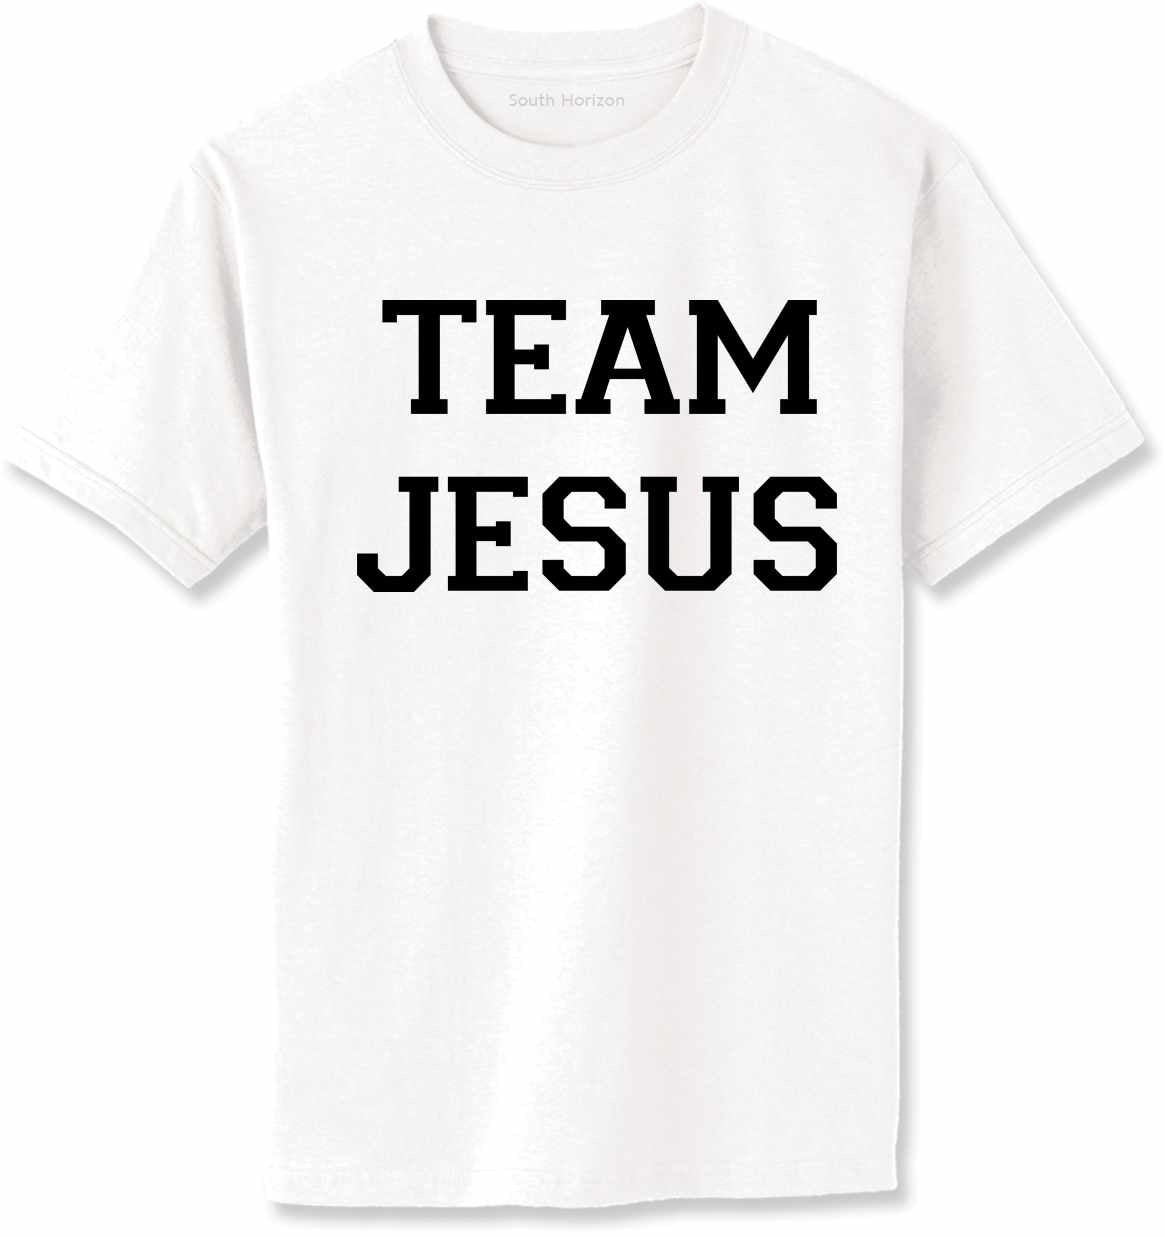 TEAM JESUS Adult T-Shirt (#589-1)